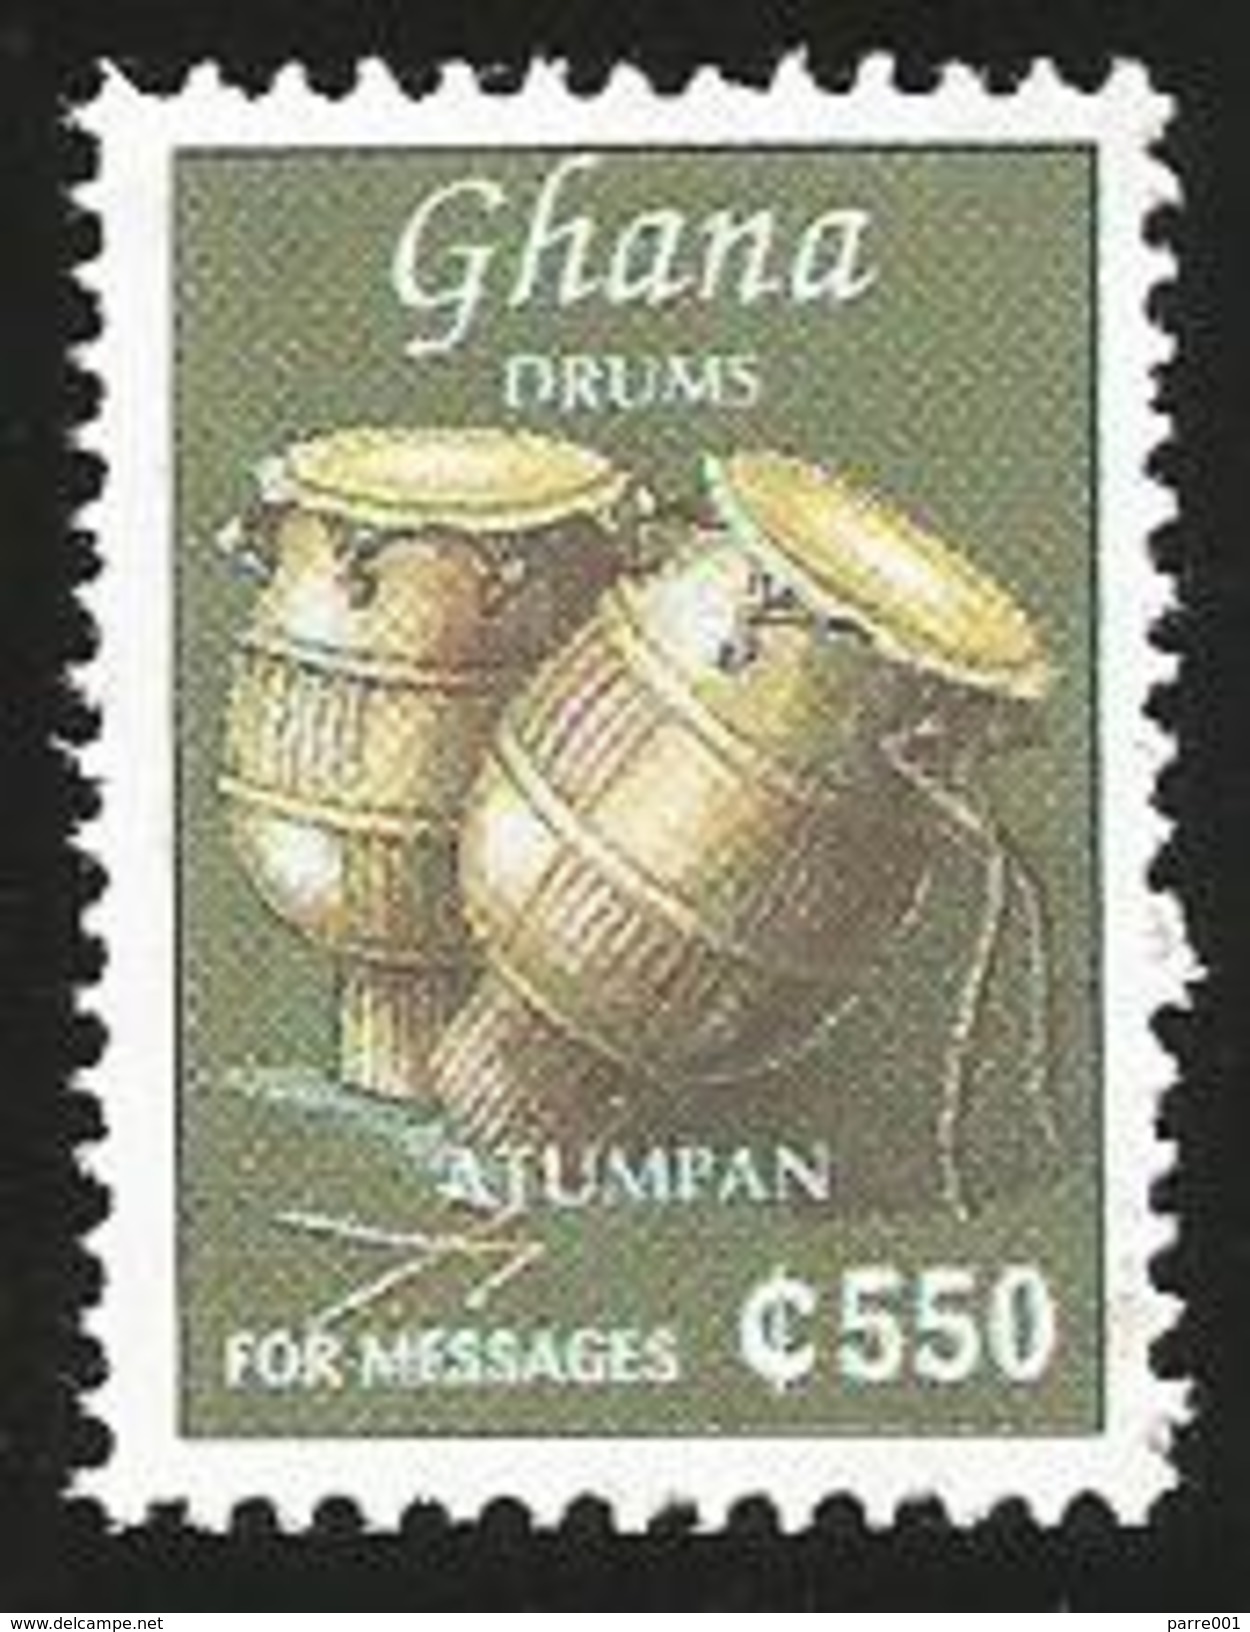 Ghana 1999 Atumpan Drums MNH - Ghana (1957-...)